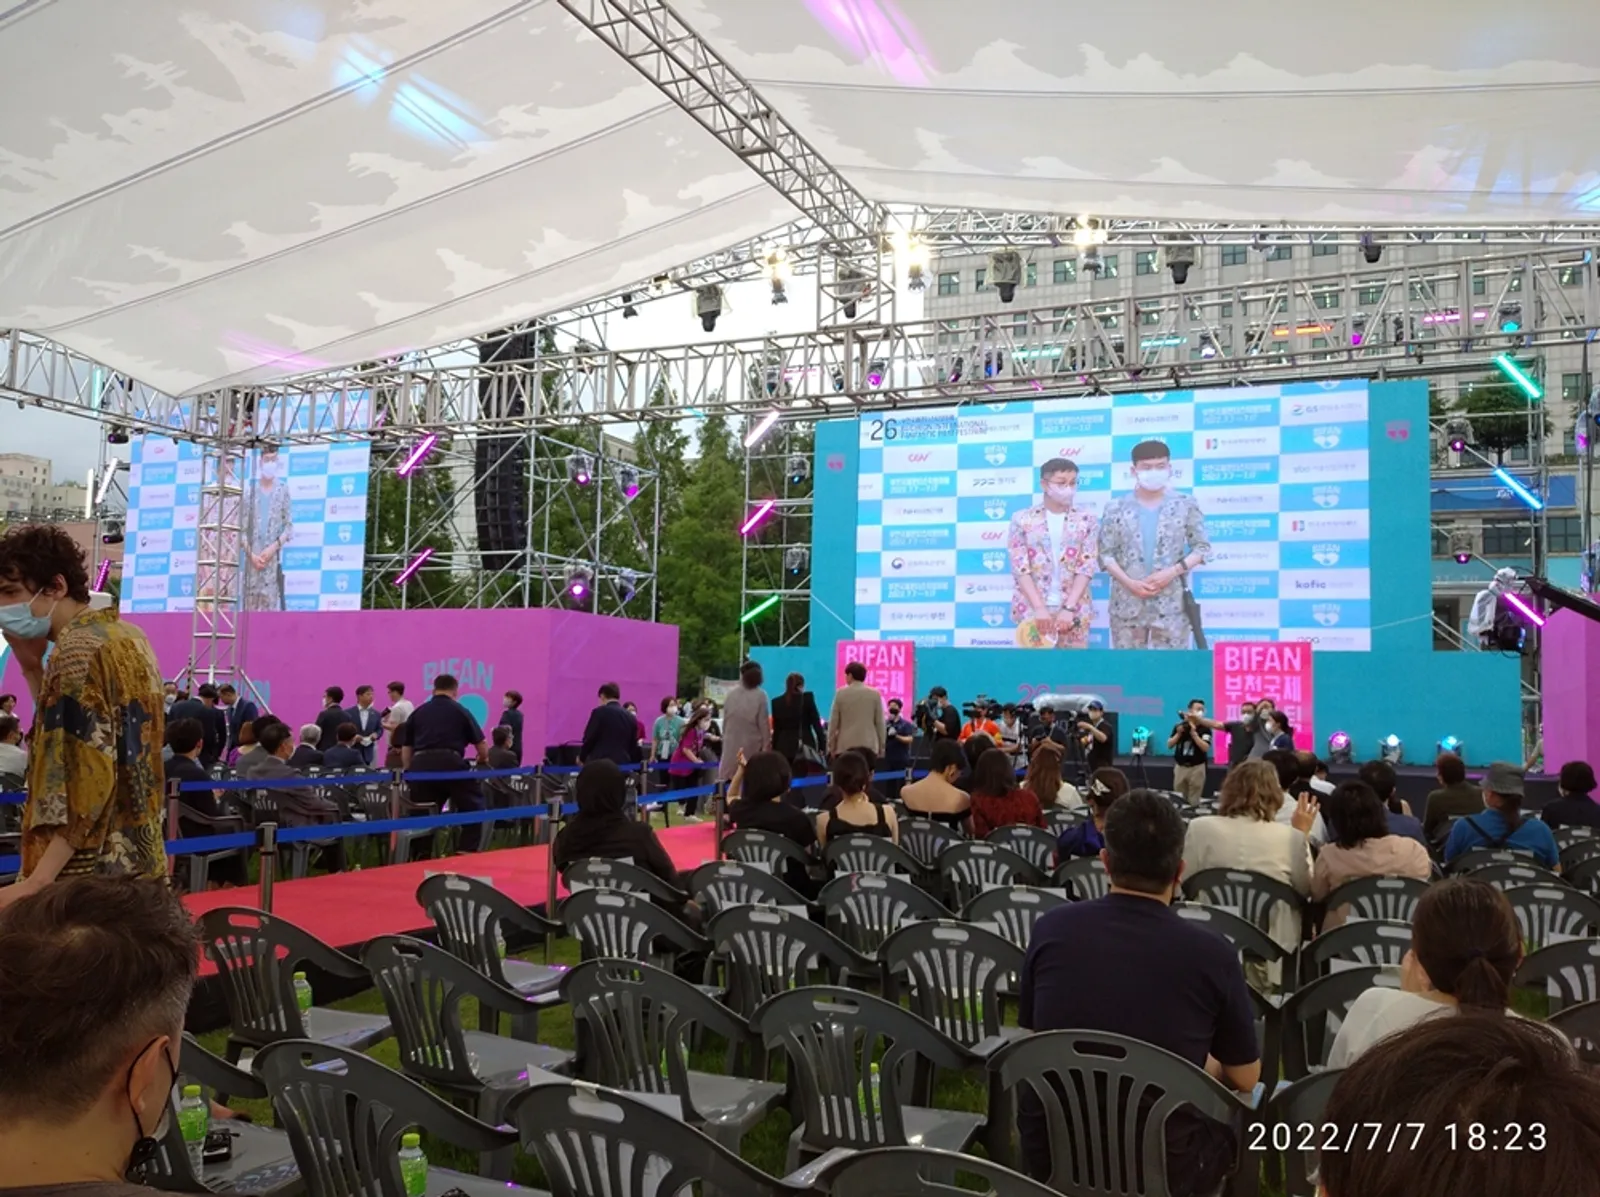 Sambutan Meriah untuk 'Inang' di World Premiere BIFAN, Bucheon Korea